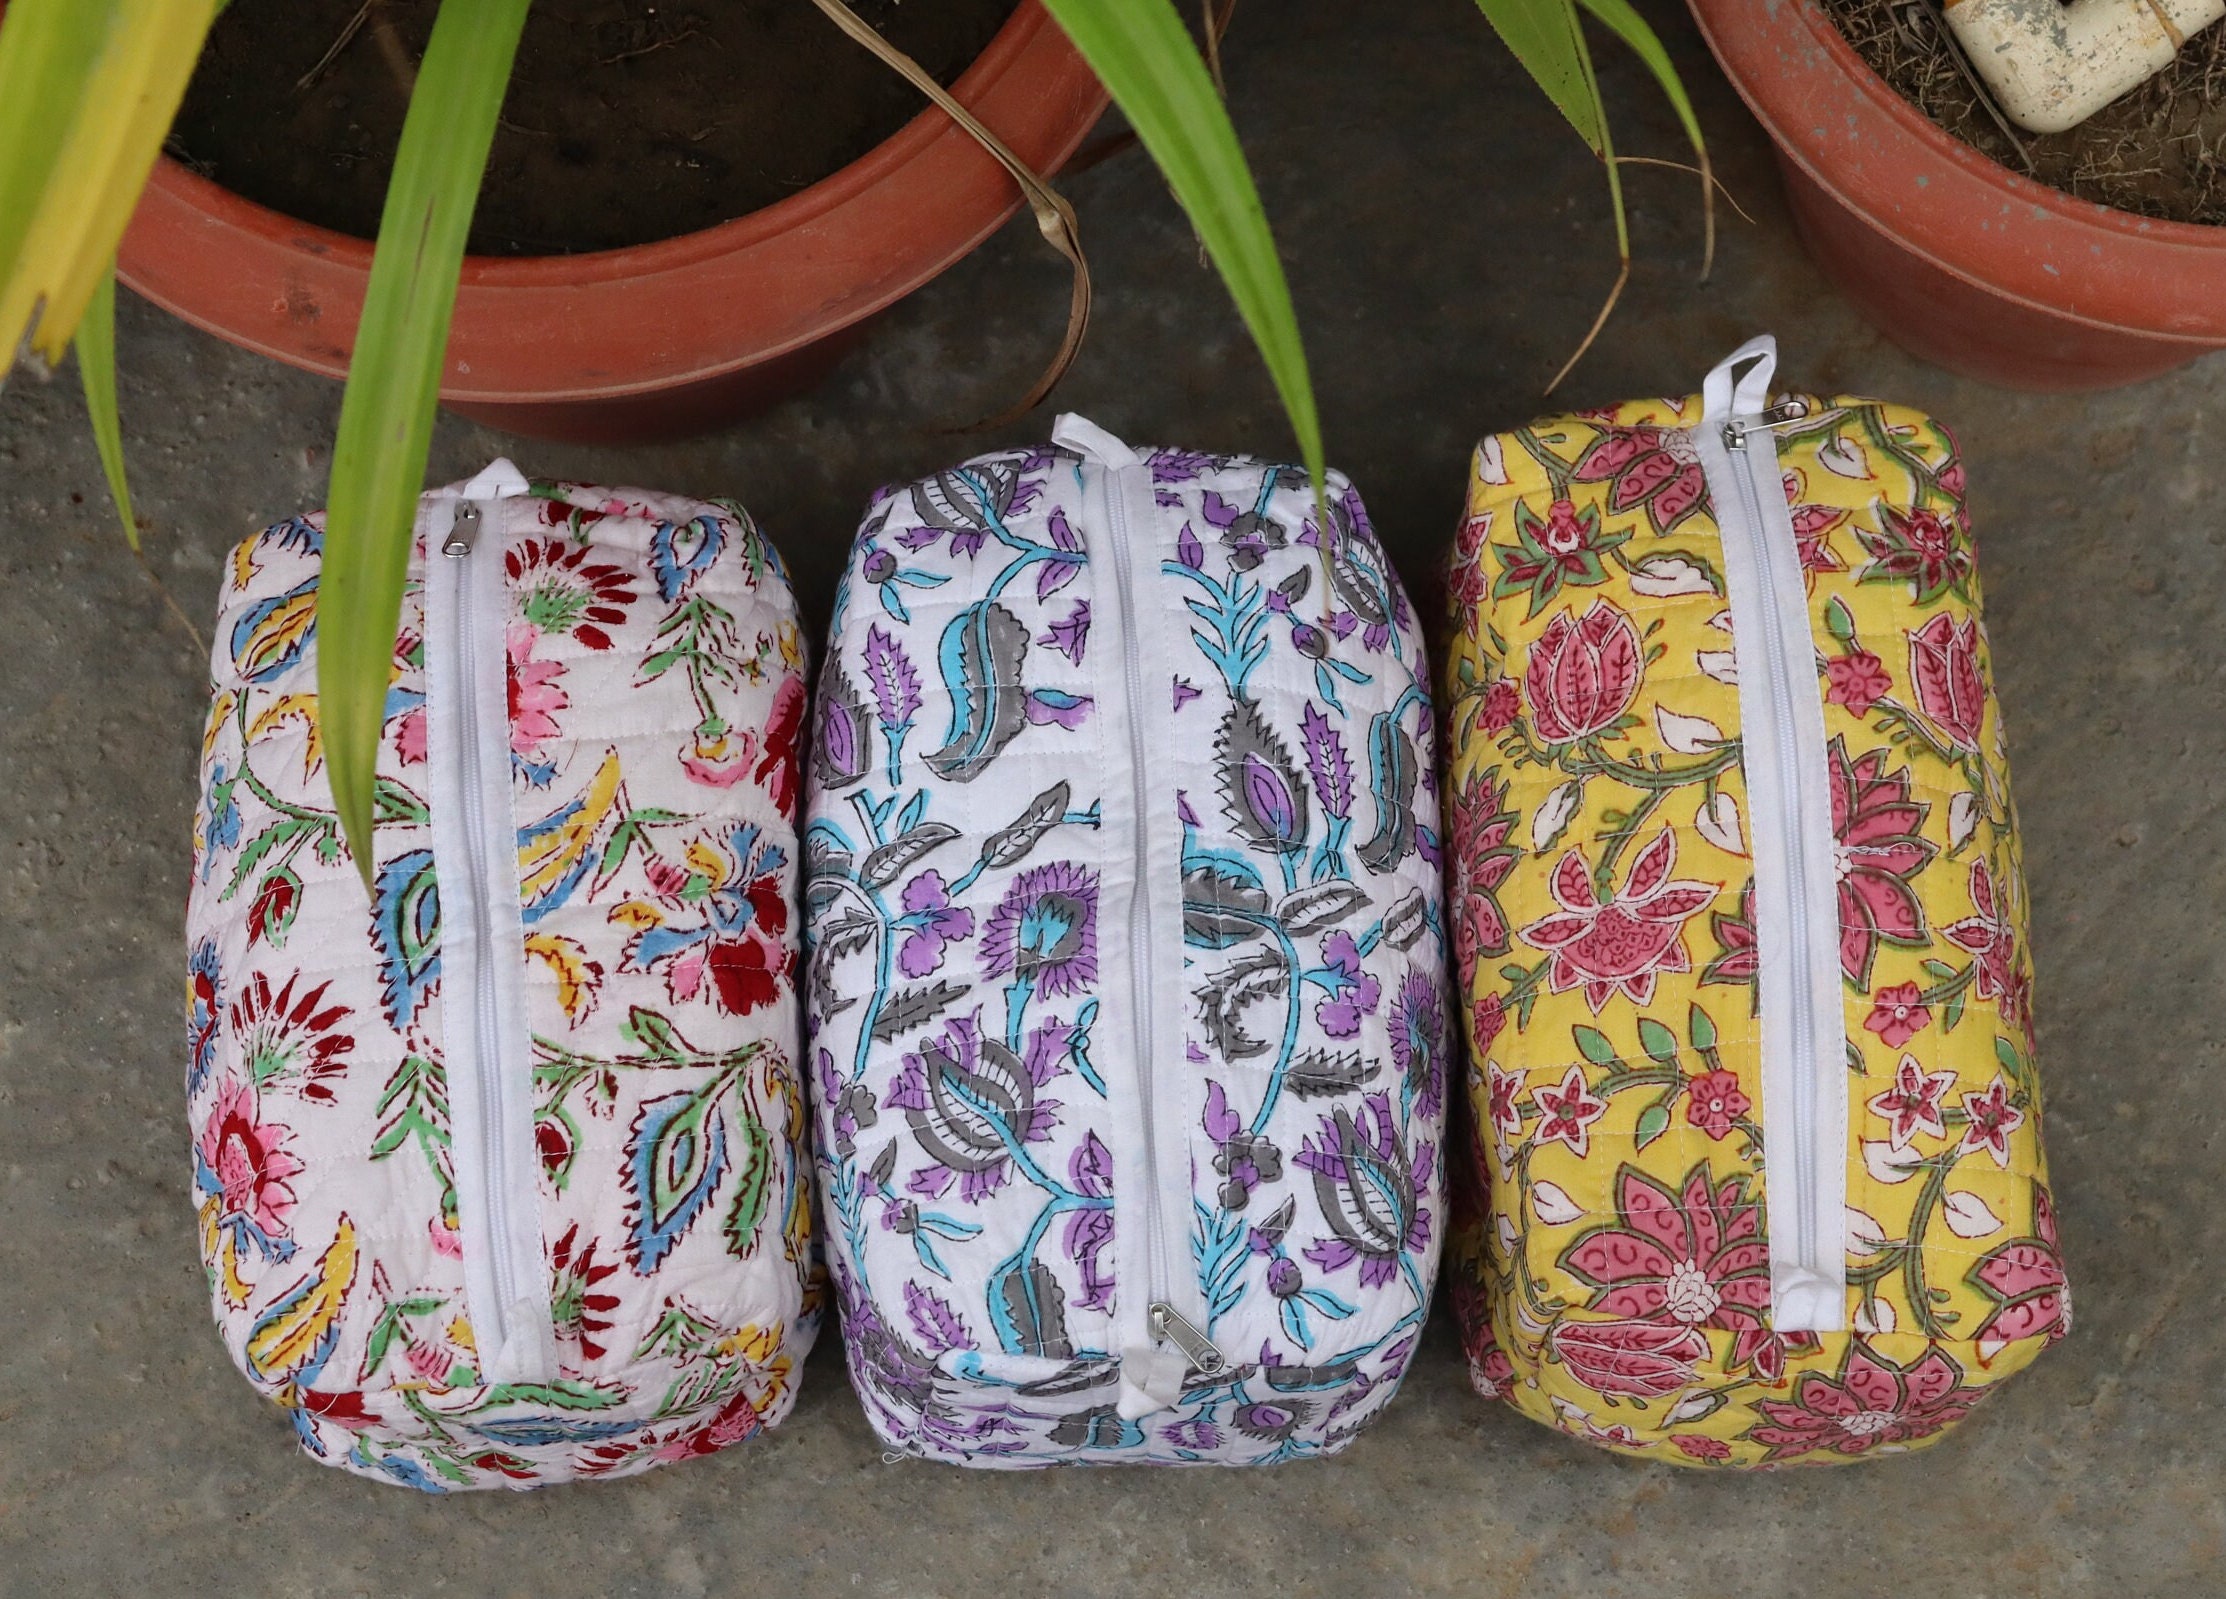 SALE 5 Pcs Blank Bags BULK DEAL 3 Colors Makeup Bag Travel Bag